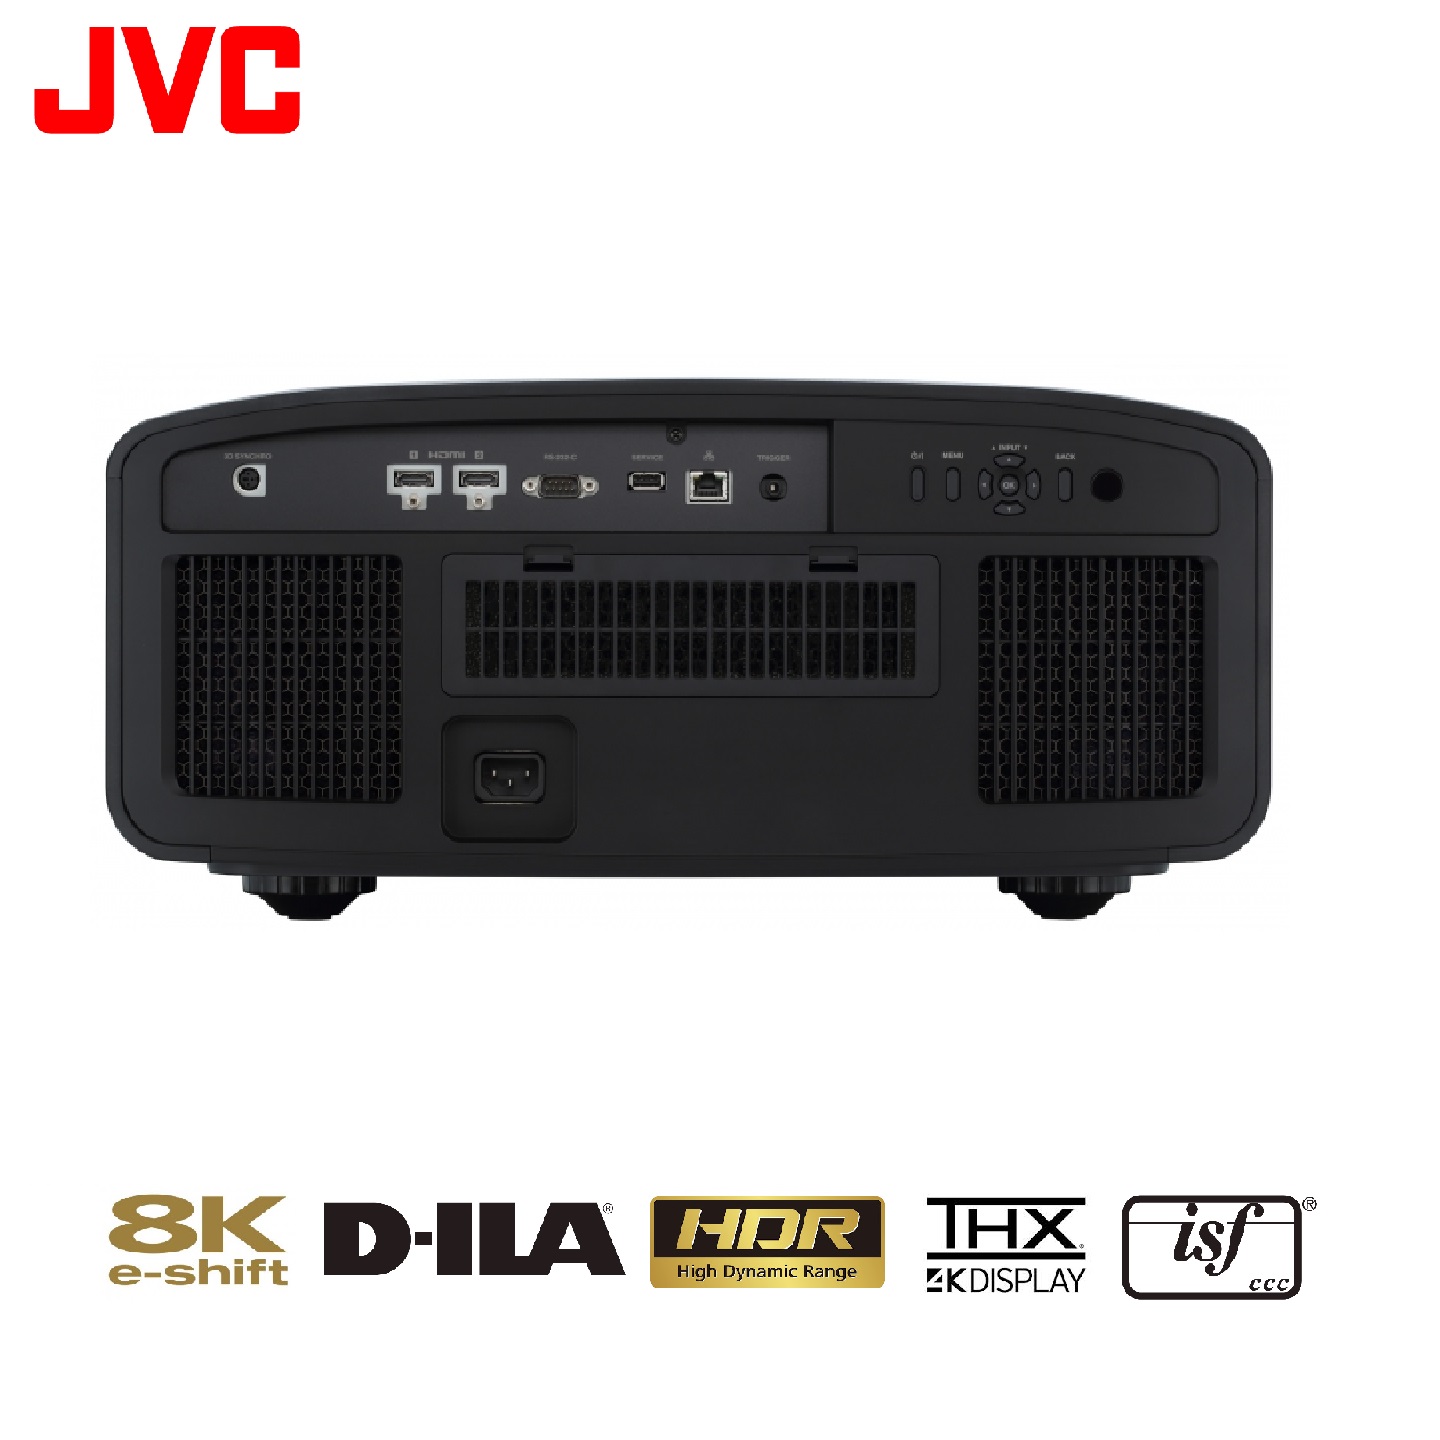 JVC DLA-NX9 原生4K 家庭劇院投影機